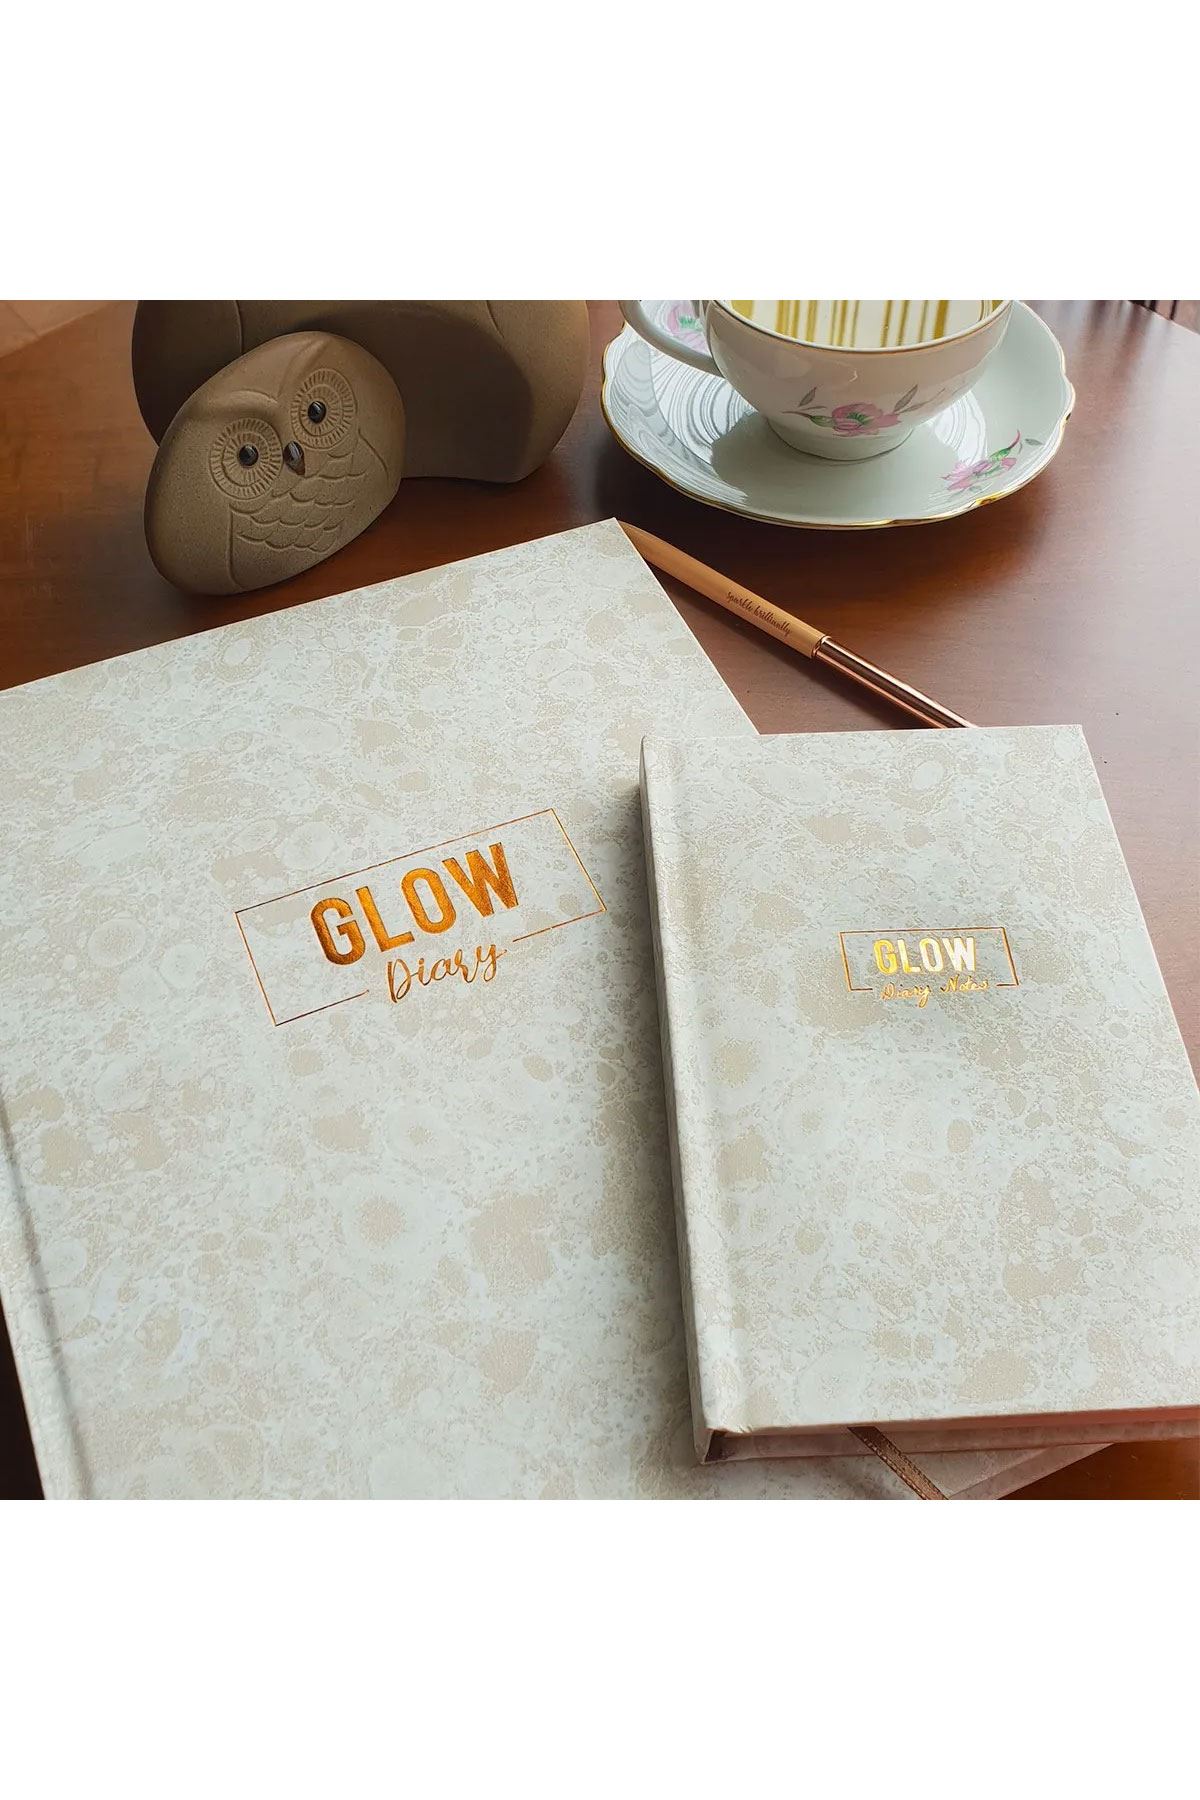 Glow Diary & Glow Diary Notes